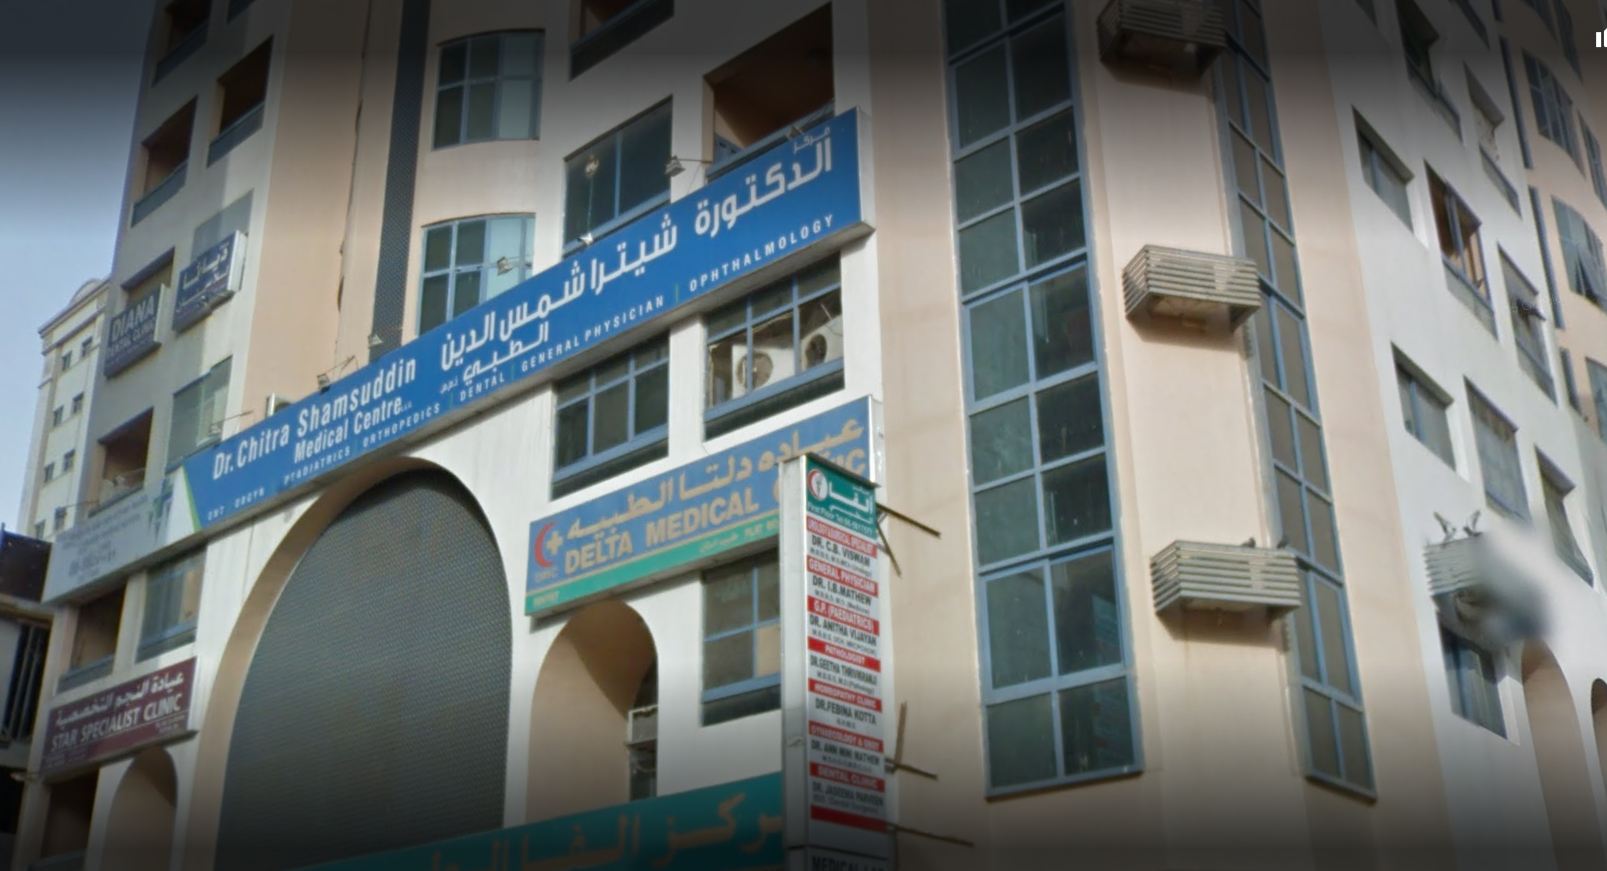 Dr. Chithra Shamsudheen's Medical Centre in Rolla